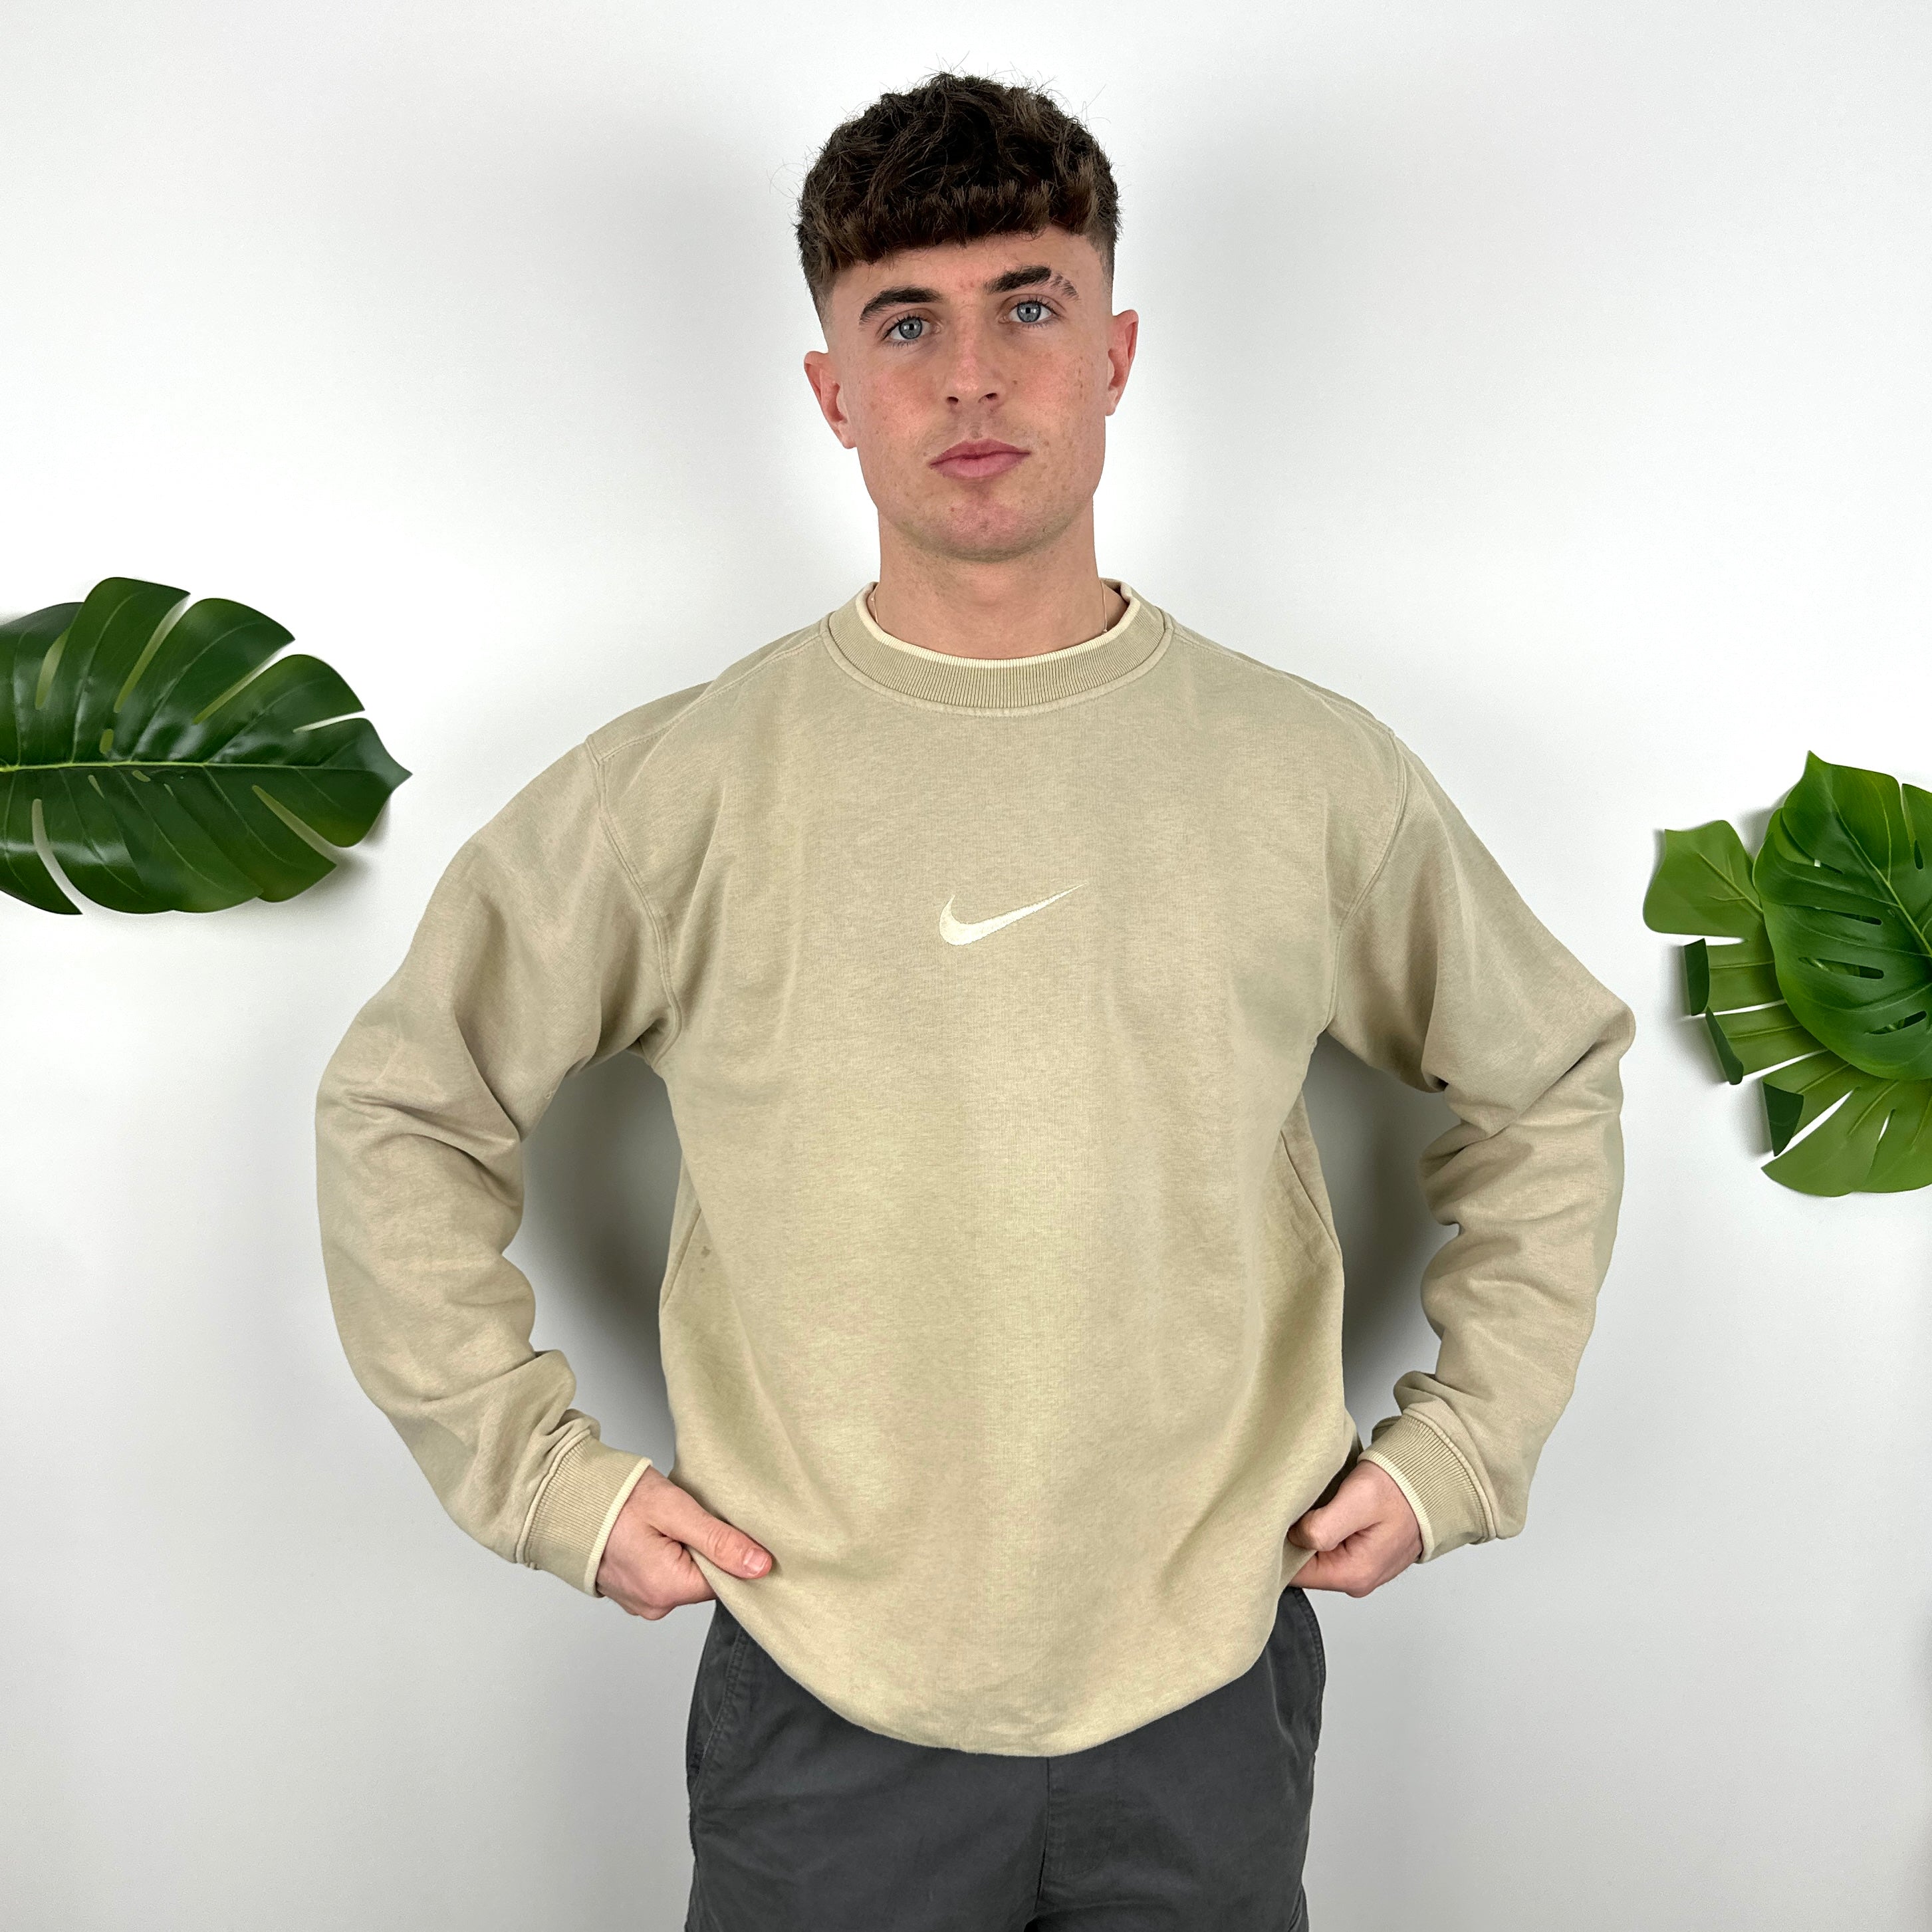 Nike RARE Tan Brown Embroidered Swoosh Sweatshirt (L)